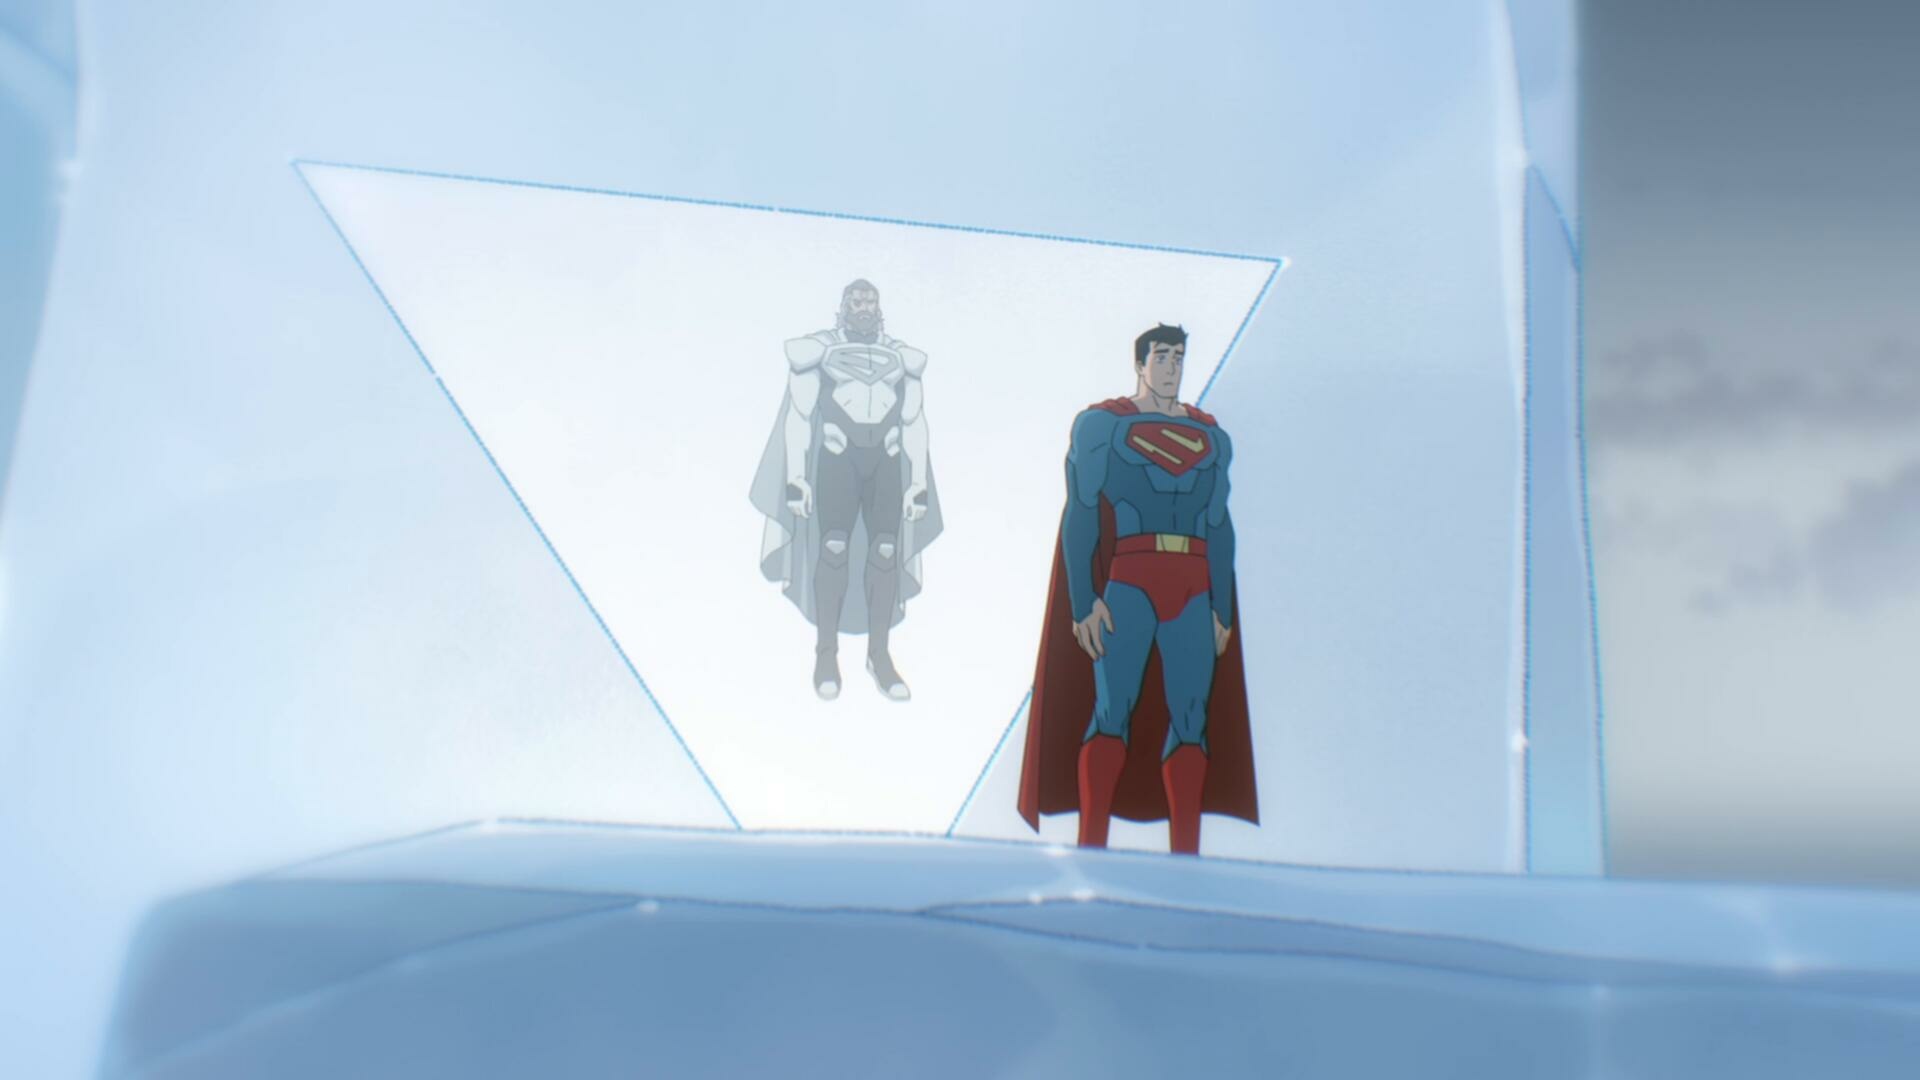 My Adventures with Superman S02E01 1080p WEB h264 EDITH TGx